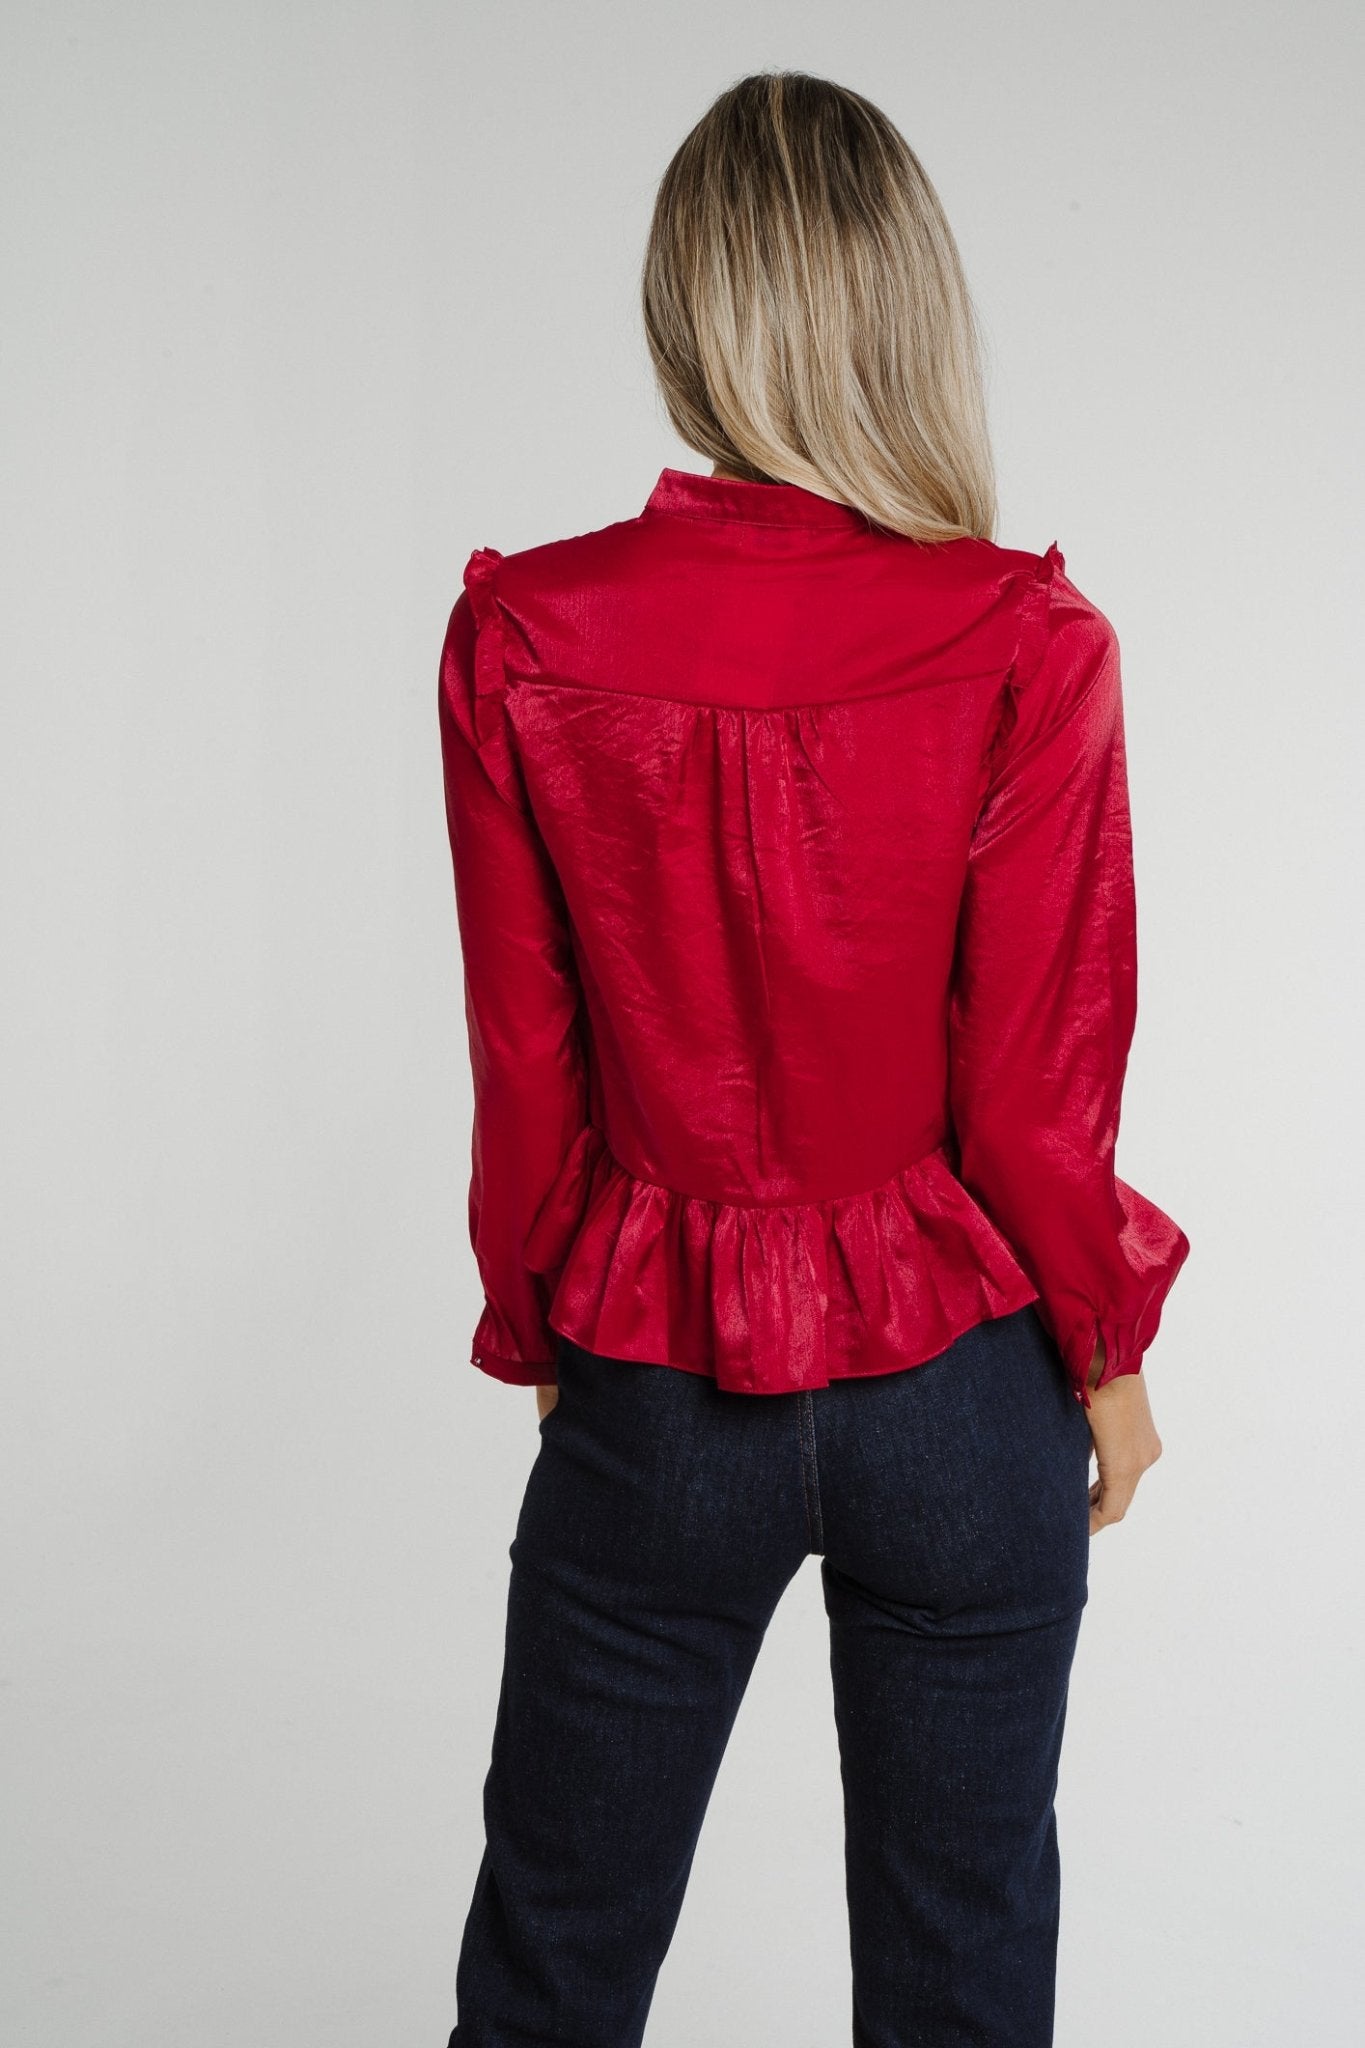 Daisy Peplum Top In Red - The Walk in Wardrobe